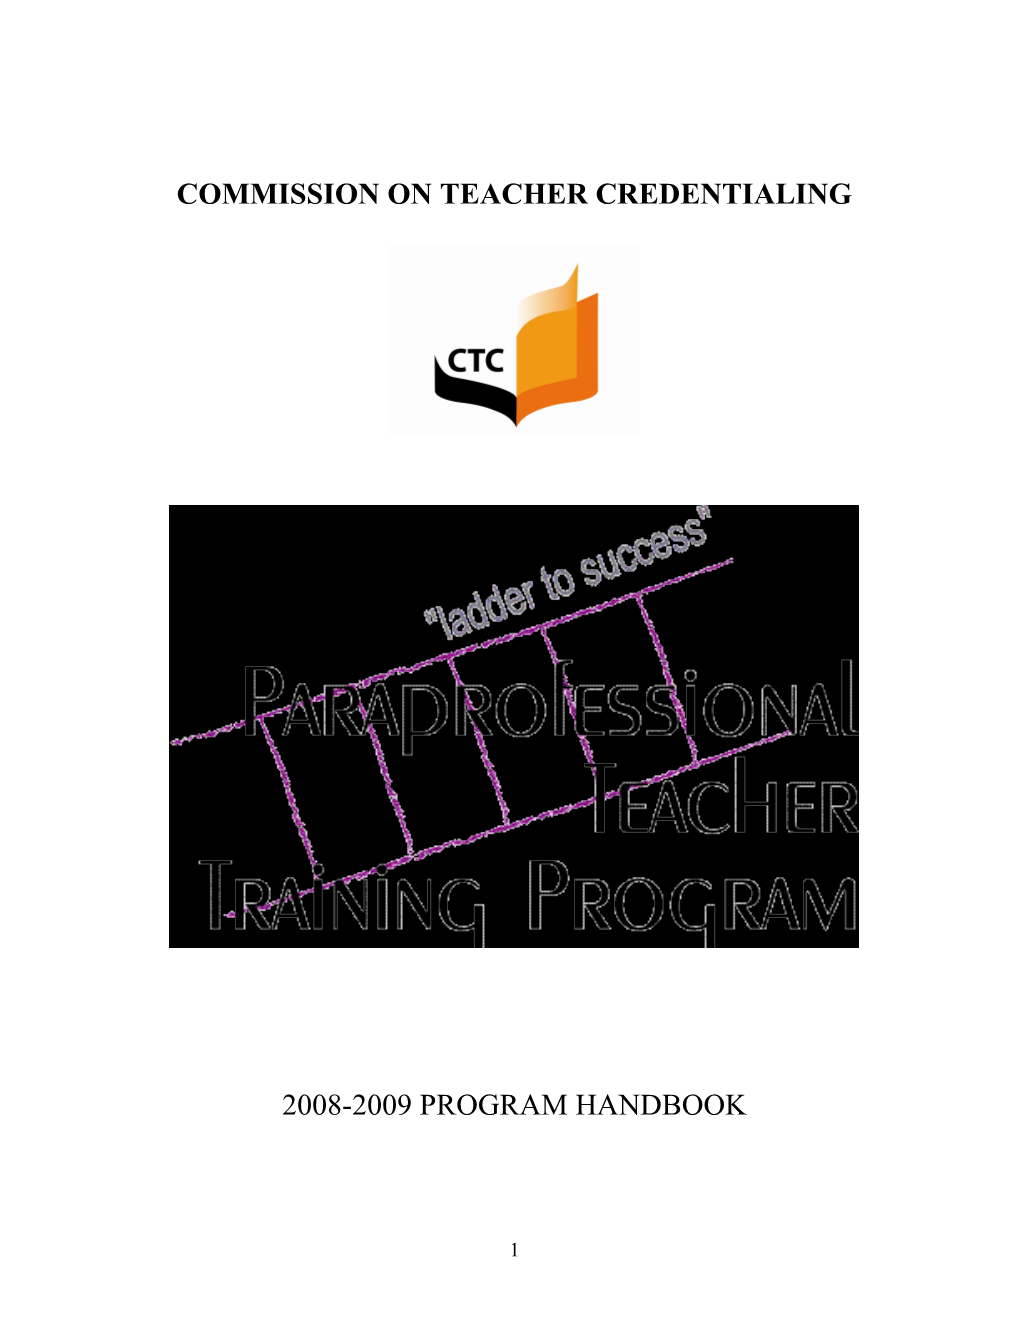 California School Paraprofessional Teacher Training Program